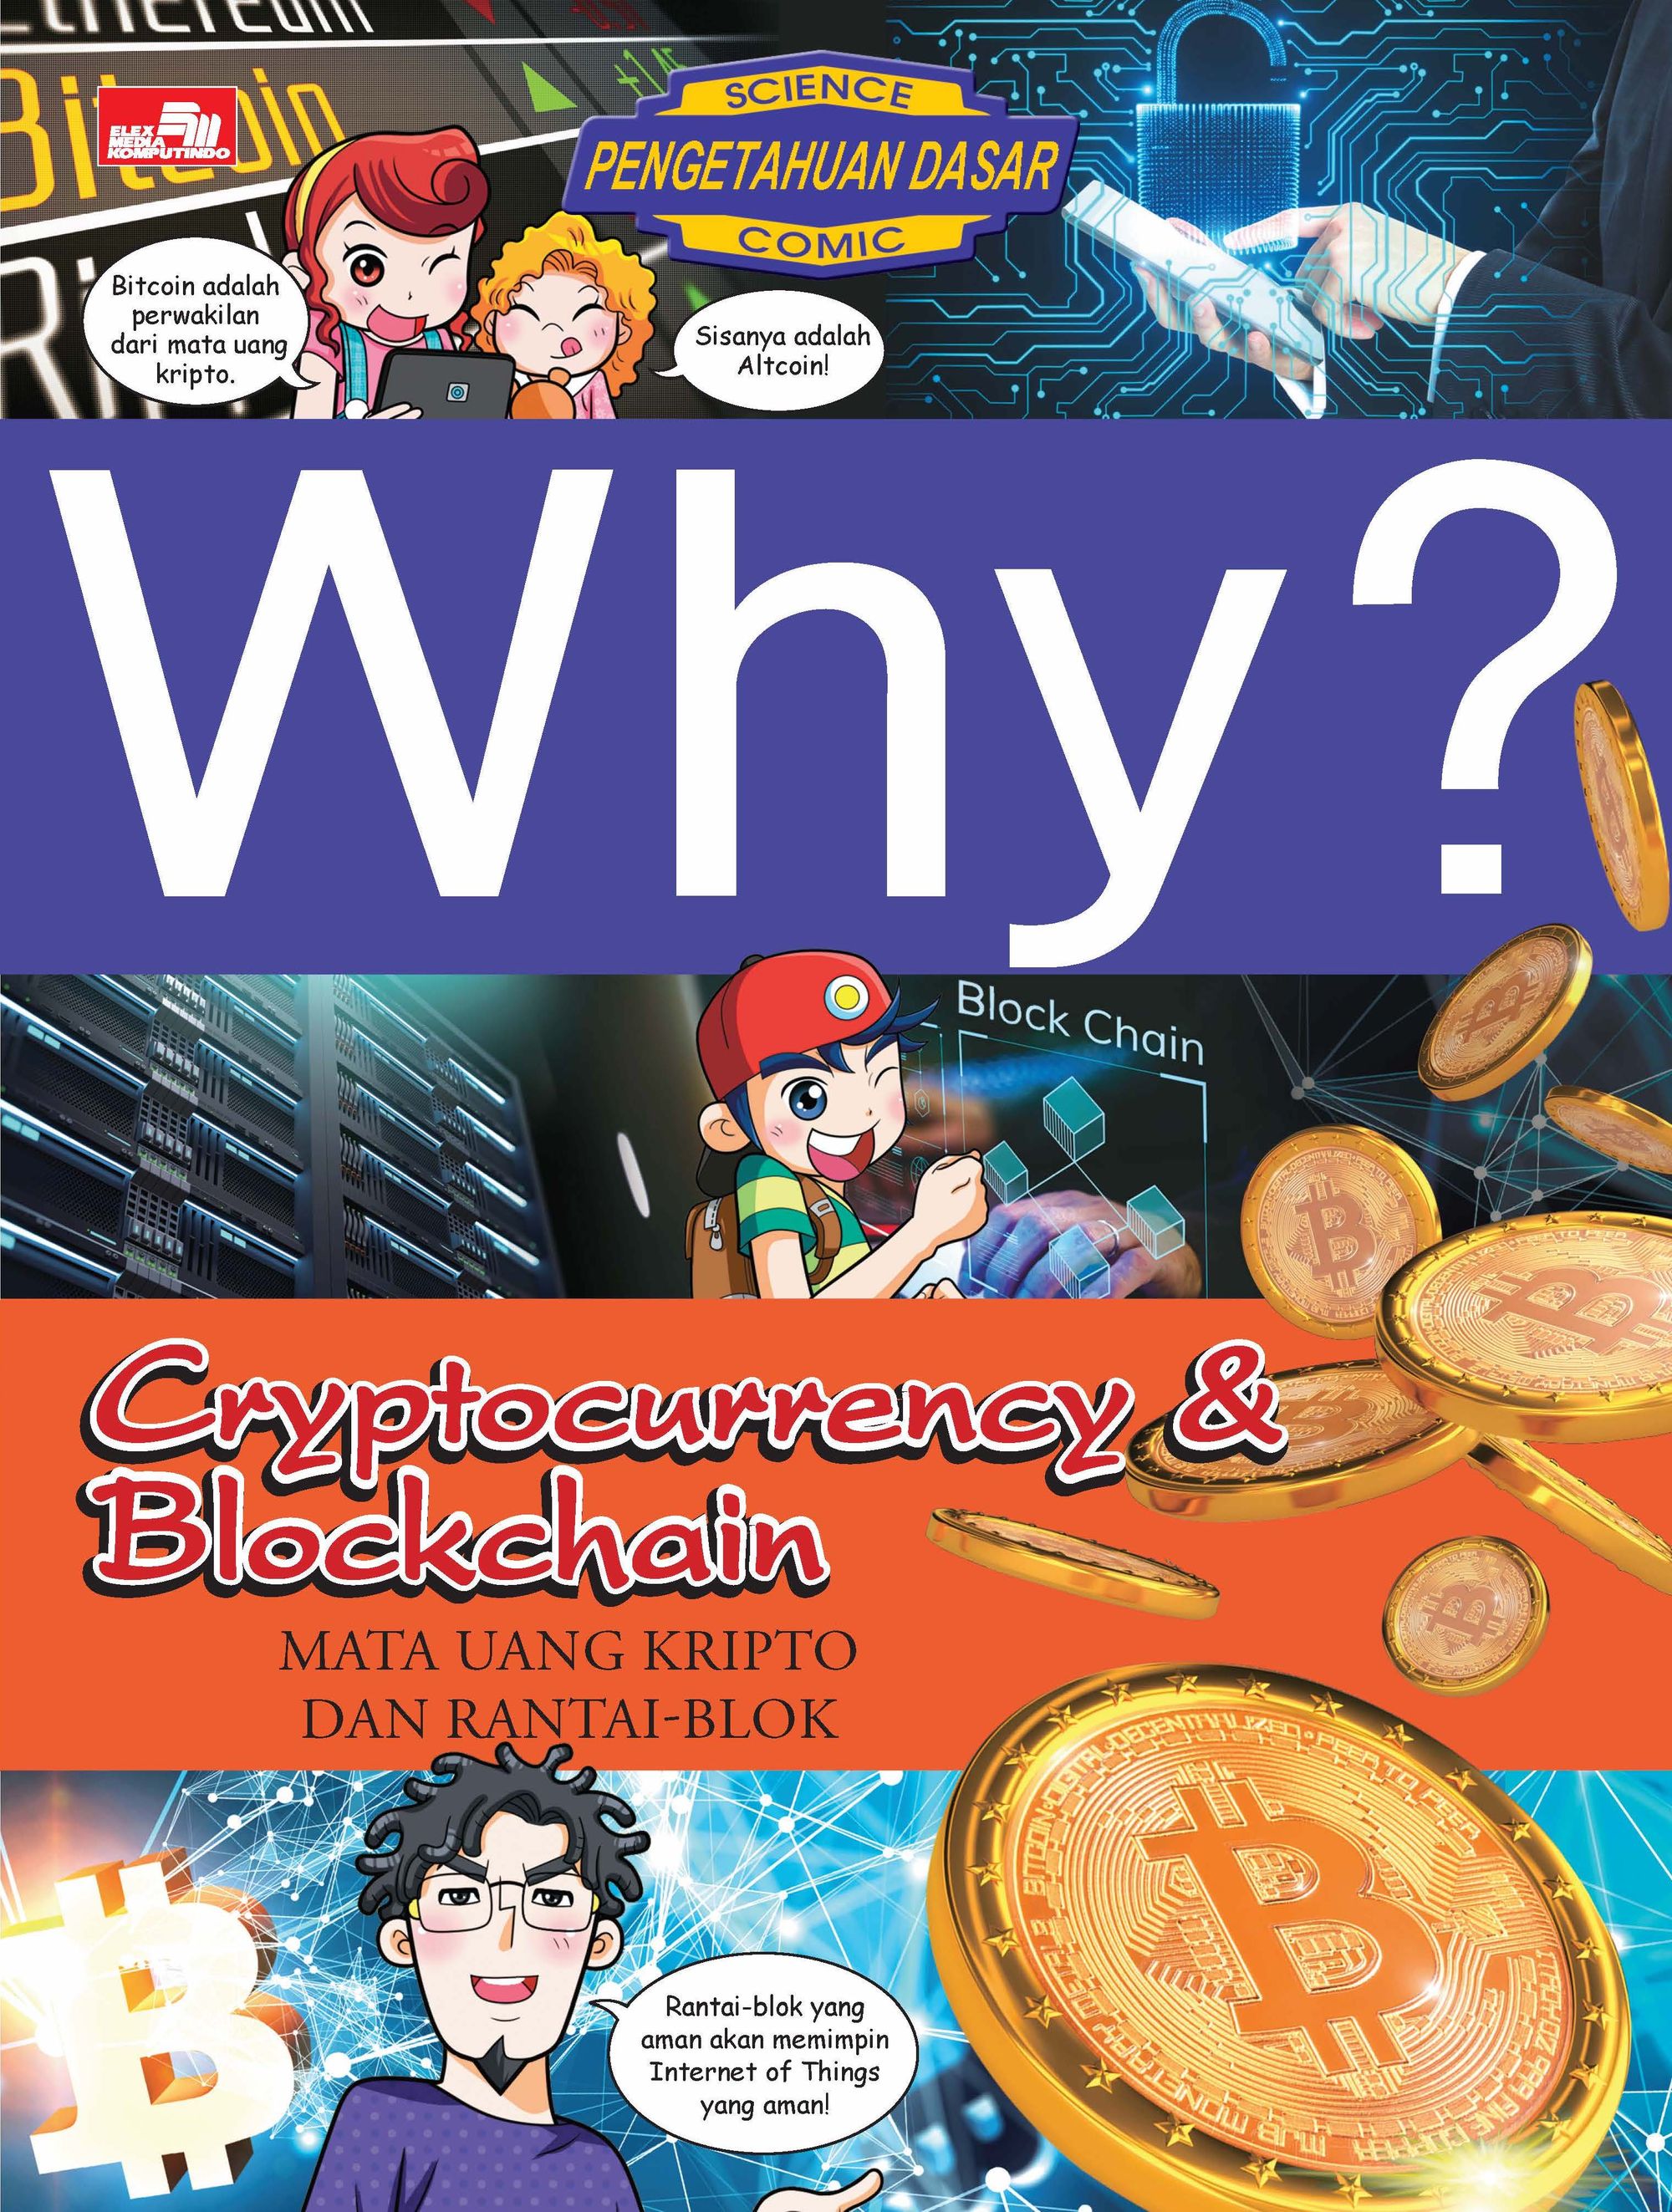 Adalah bitcoin Apa Itu